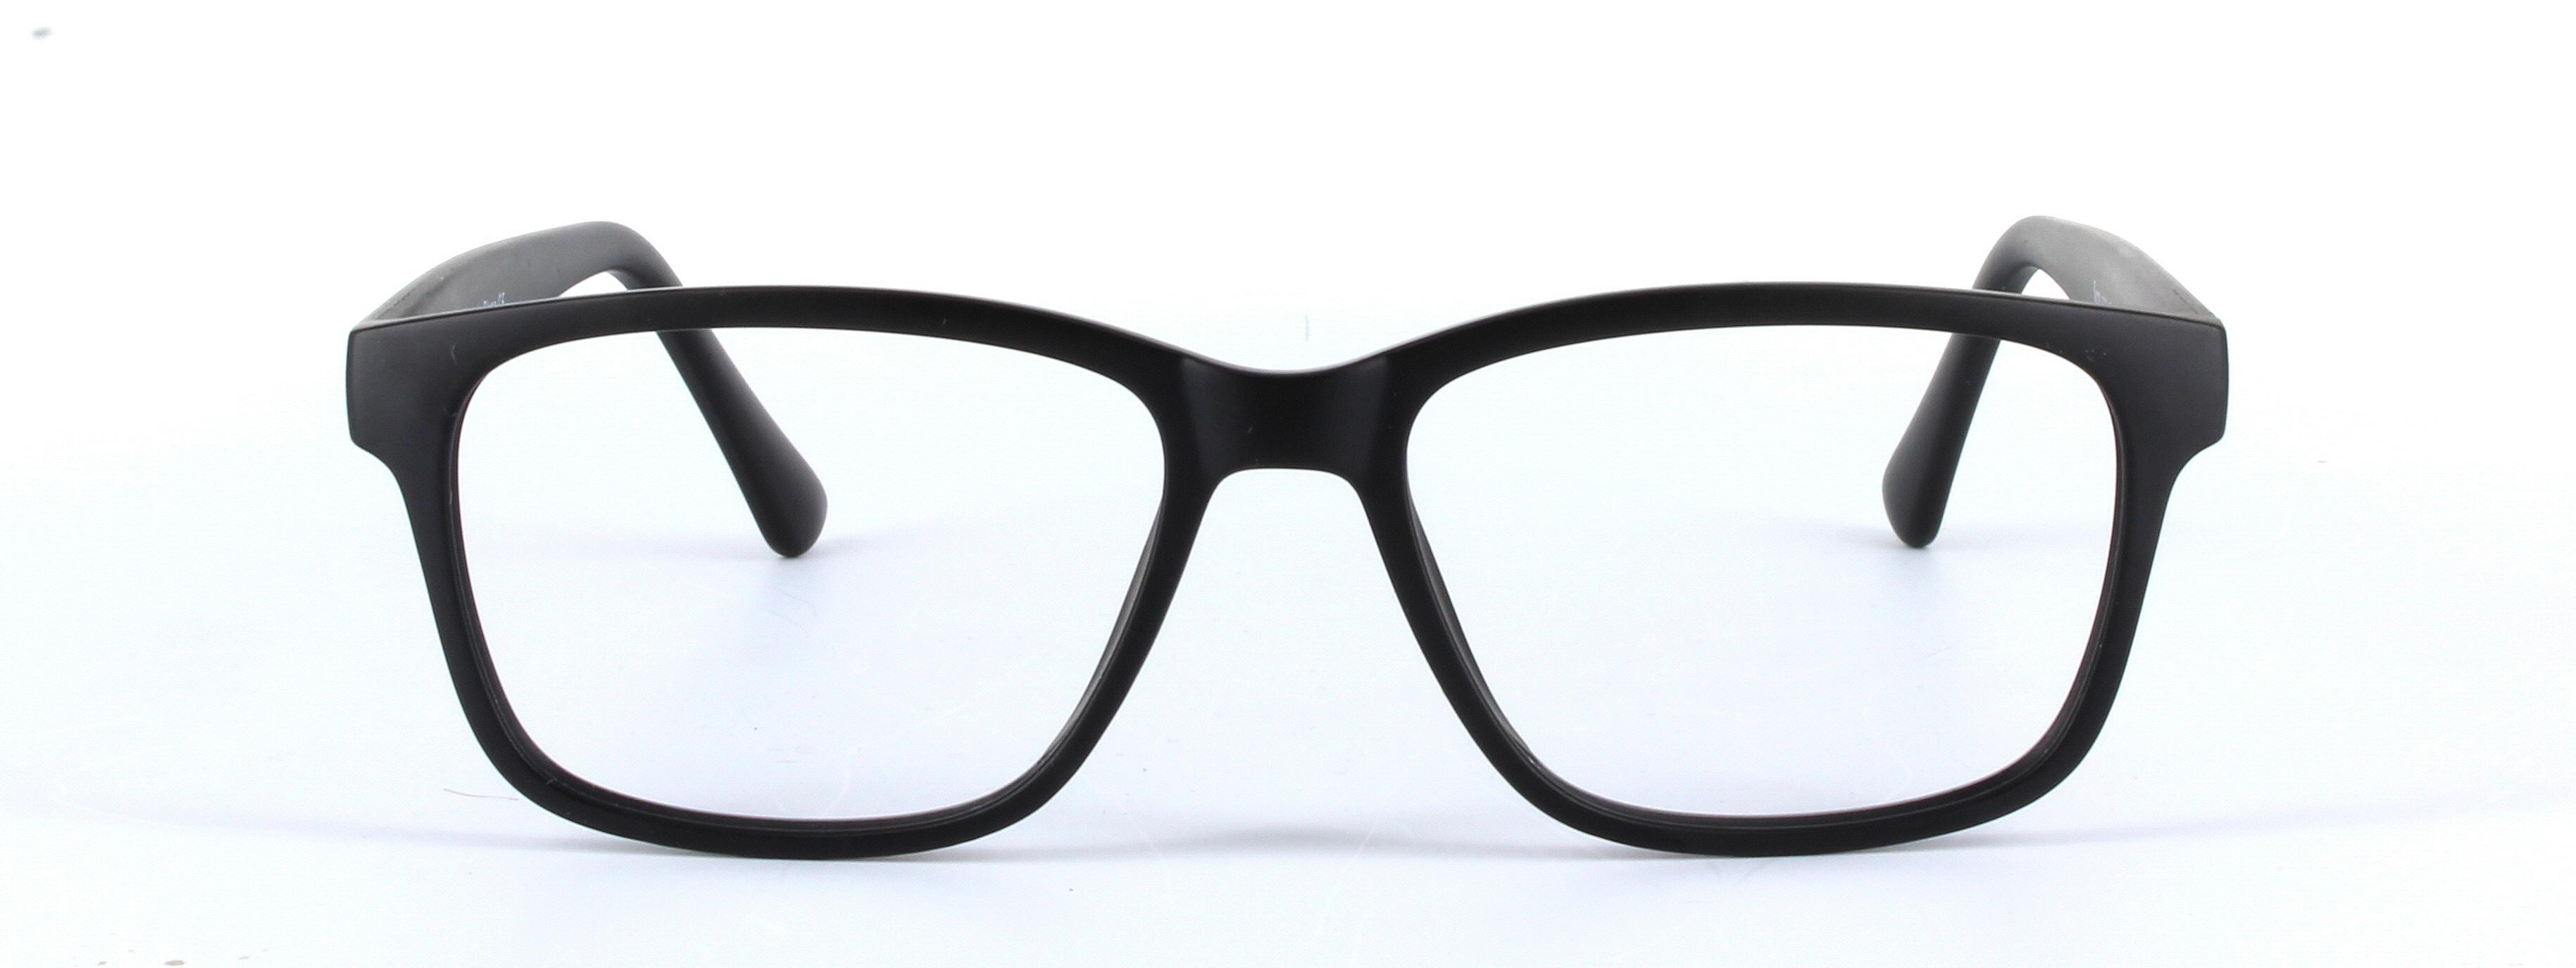 Chelsea Black Oval Square Plastic Glasses - Image View 5